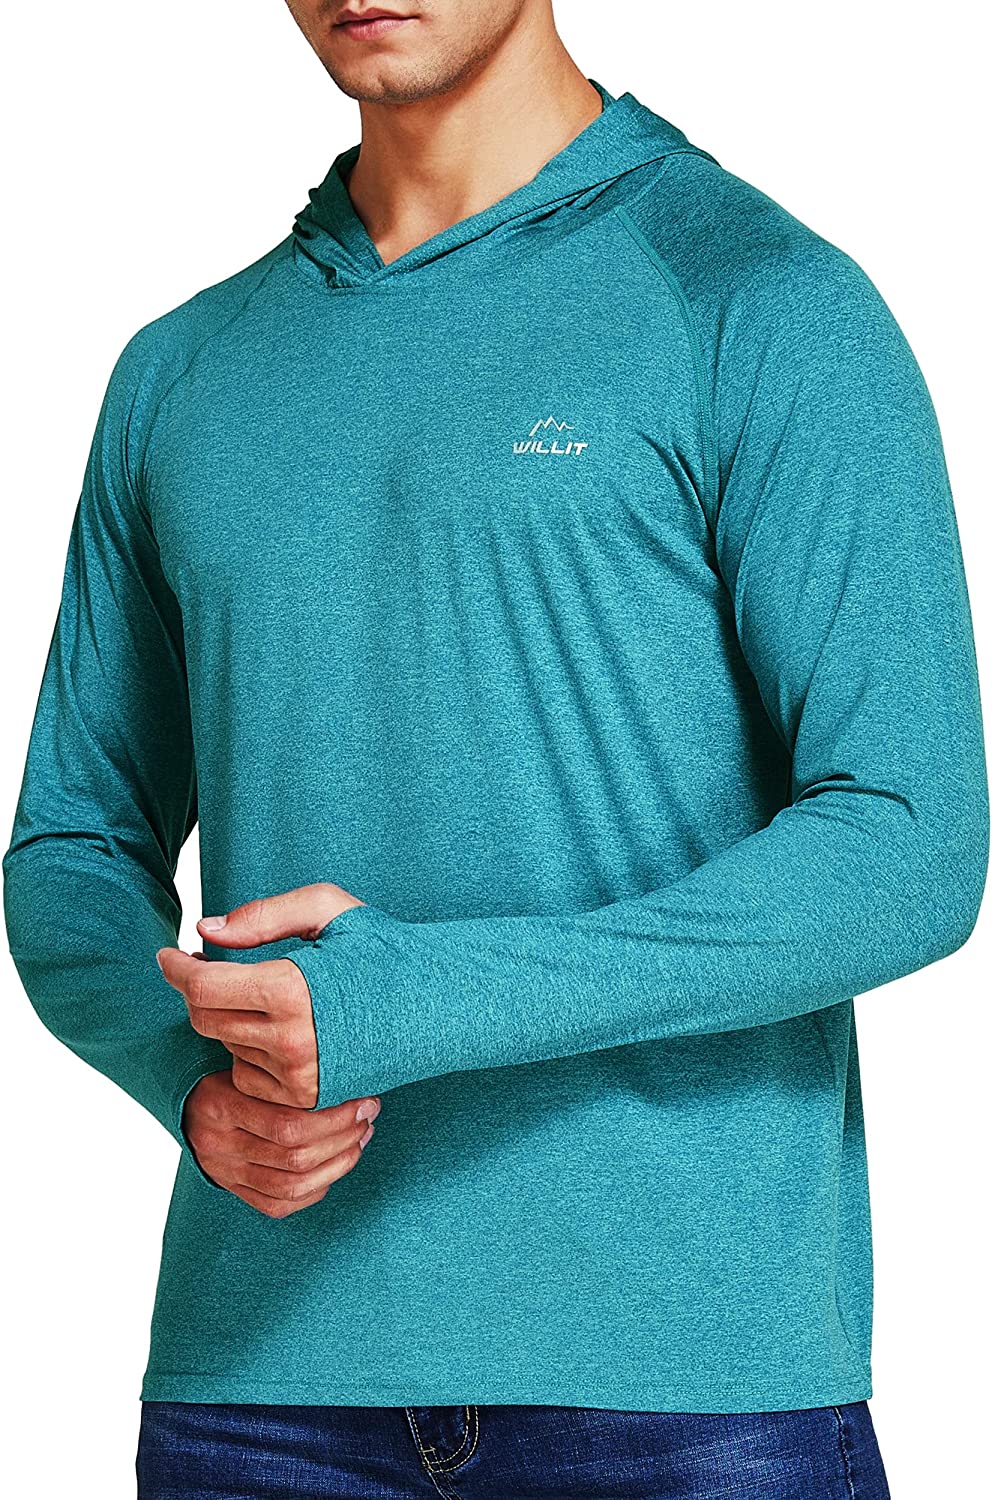 Willit Men's UPF 50+ Sun Protection Hoodie Shirt Long Sleeve SPF Fishing Outdoor UV Shirt Hiking Lightweight Blue L, Style 01-blue, Large